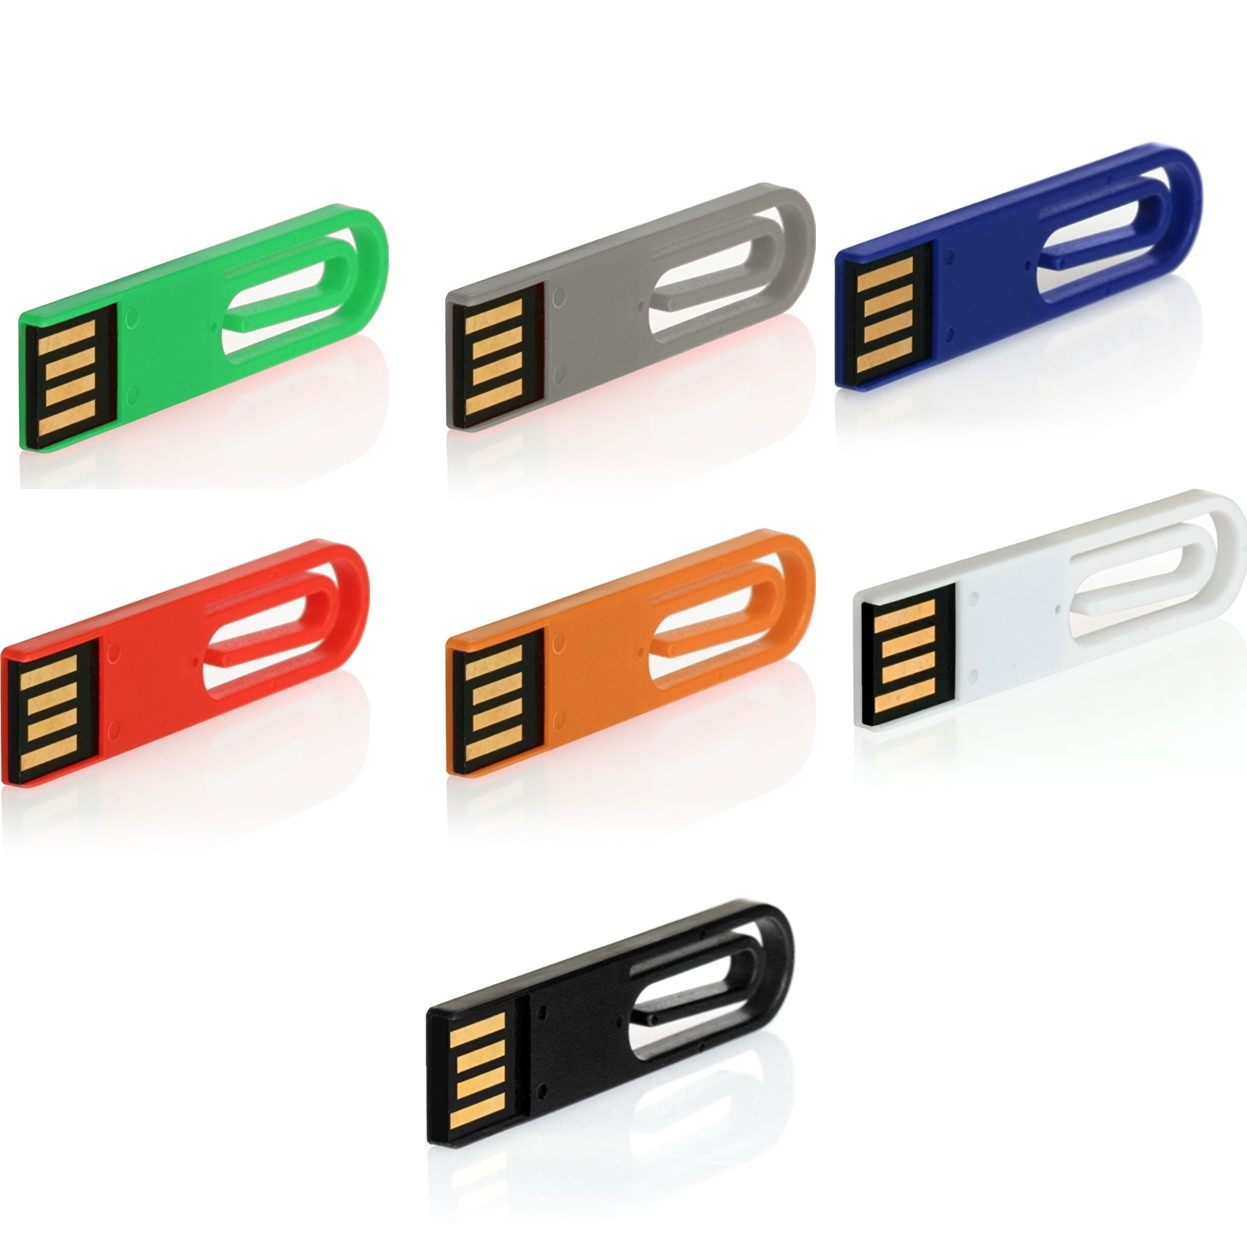 USB GERMANY ® eCLIP 64 USB-Stick (Weiß, GB)